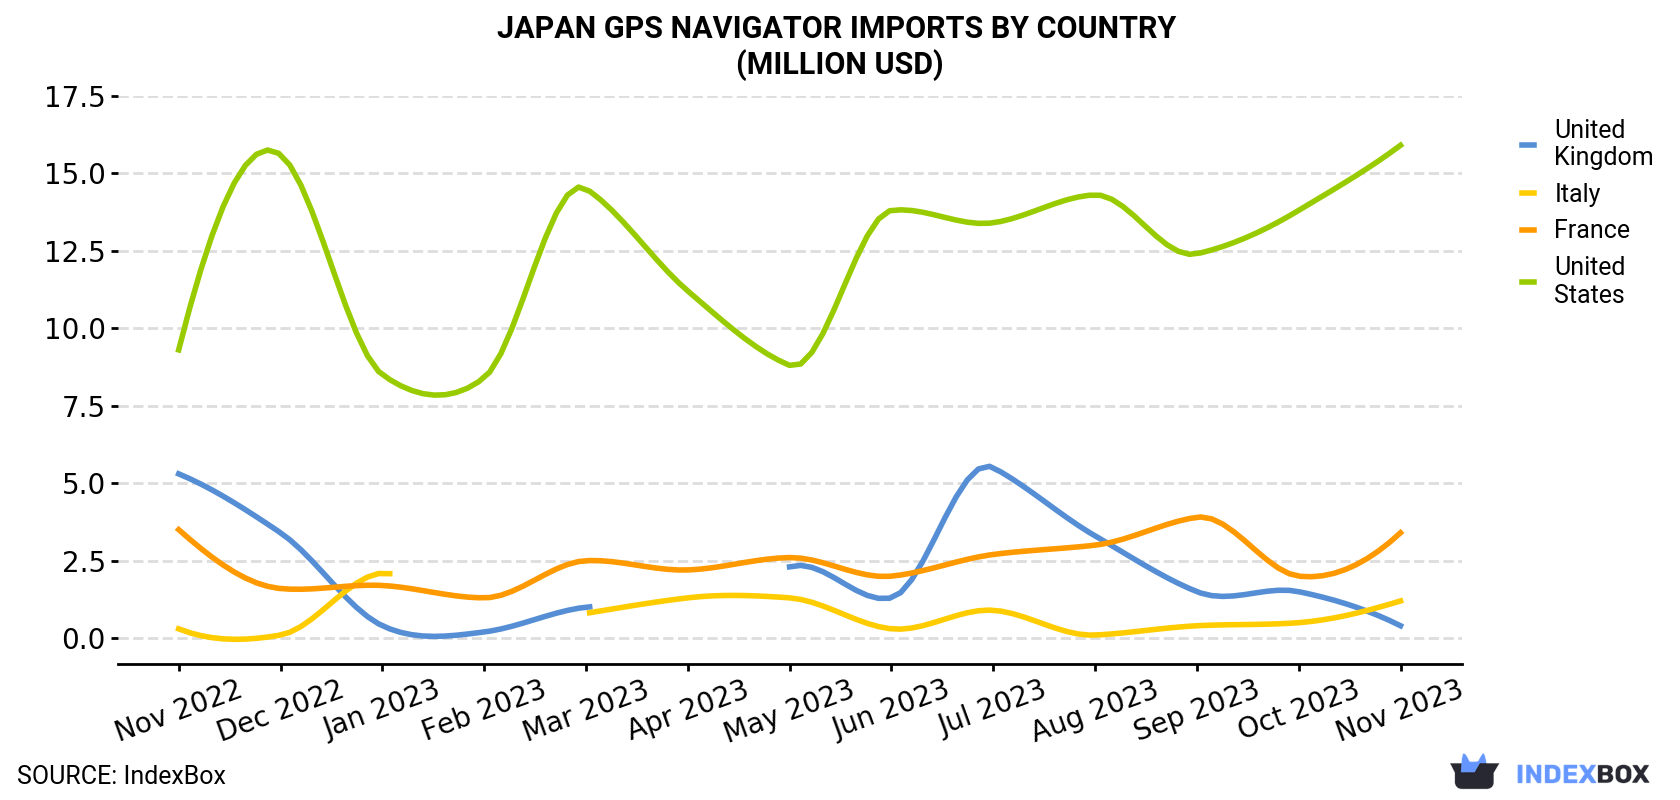 Japan GPS Navigator Imports By Country (Million USD)